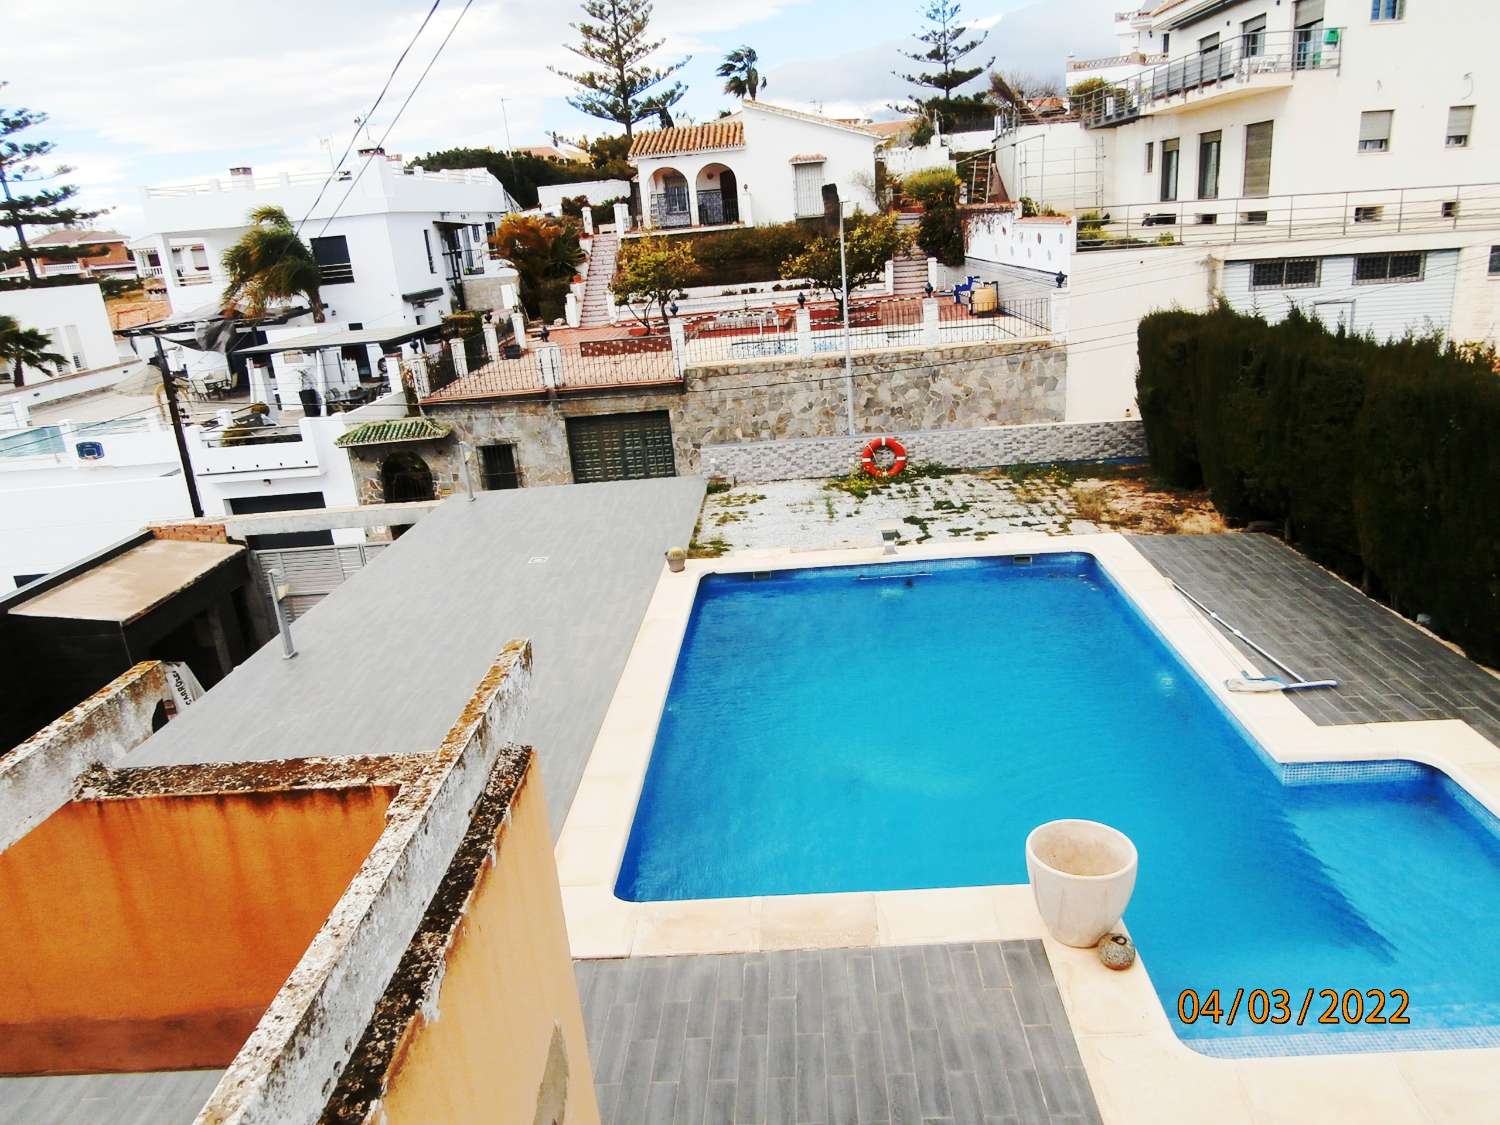 Freistehende Villa mit Pool, Meerblick, großes Potenzial, benötigt mehrere Oberflächen, ORIGINALPREIS 540.000 €.